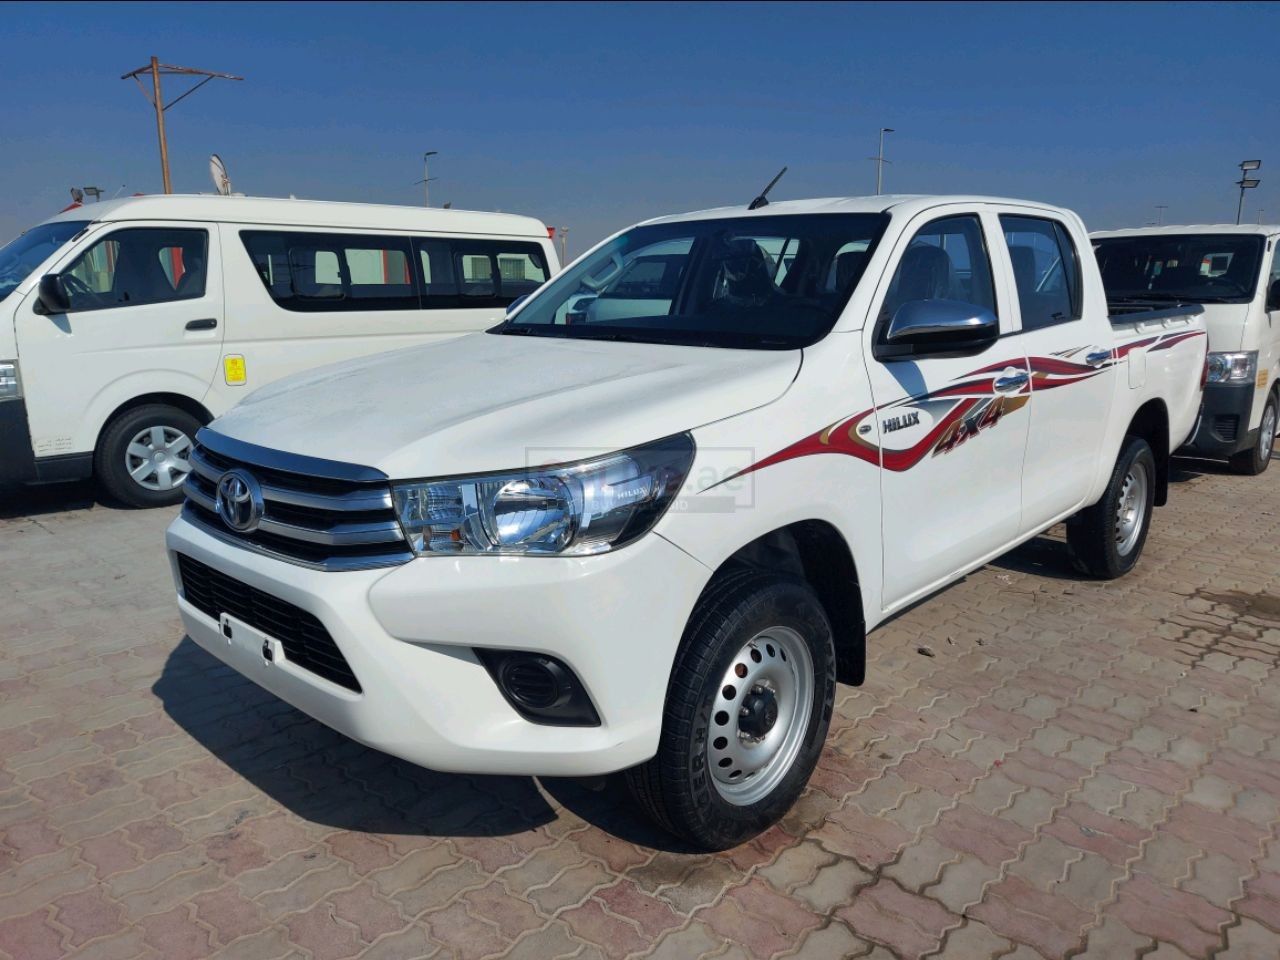 Toyota Hiace 2017 AED 75,000, GCC Spec, Good condition, Negotiable